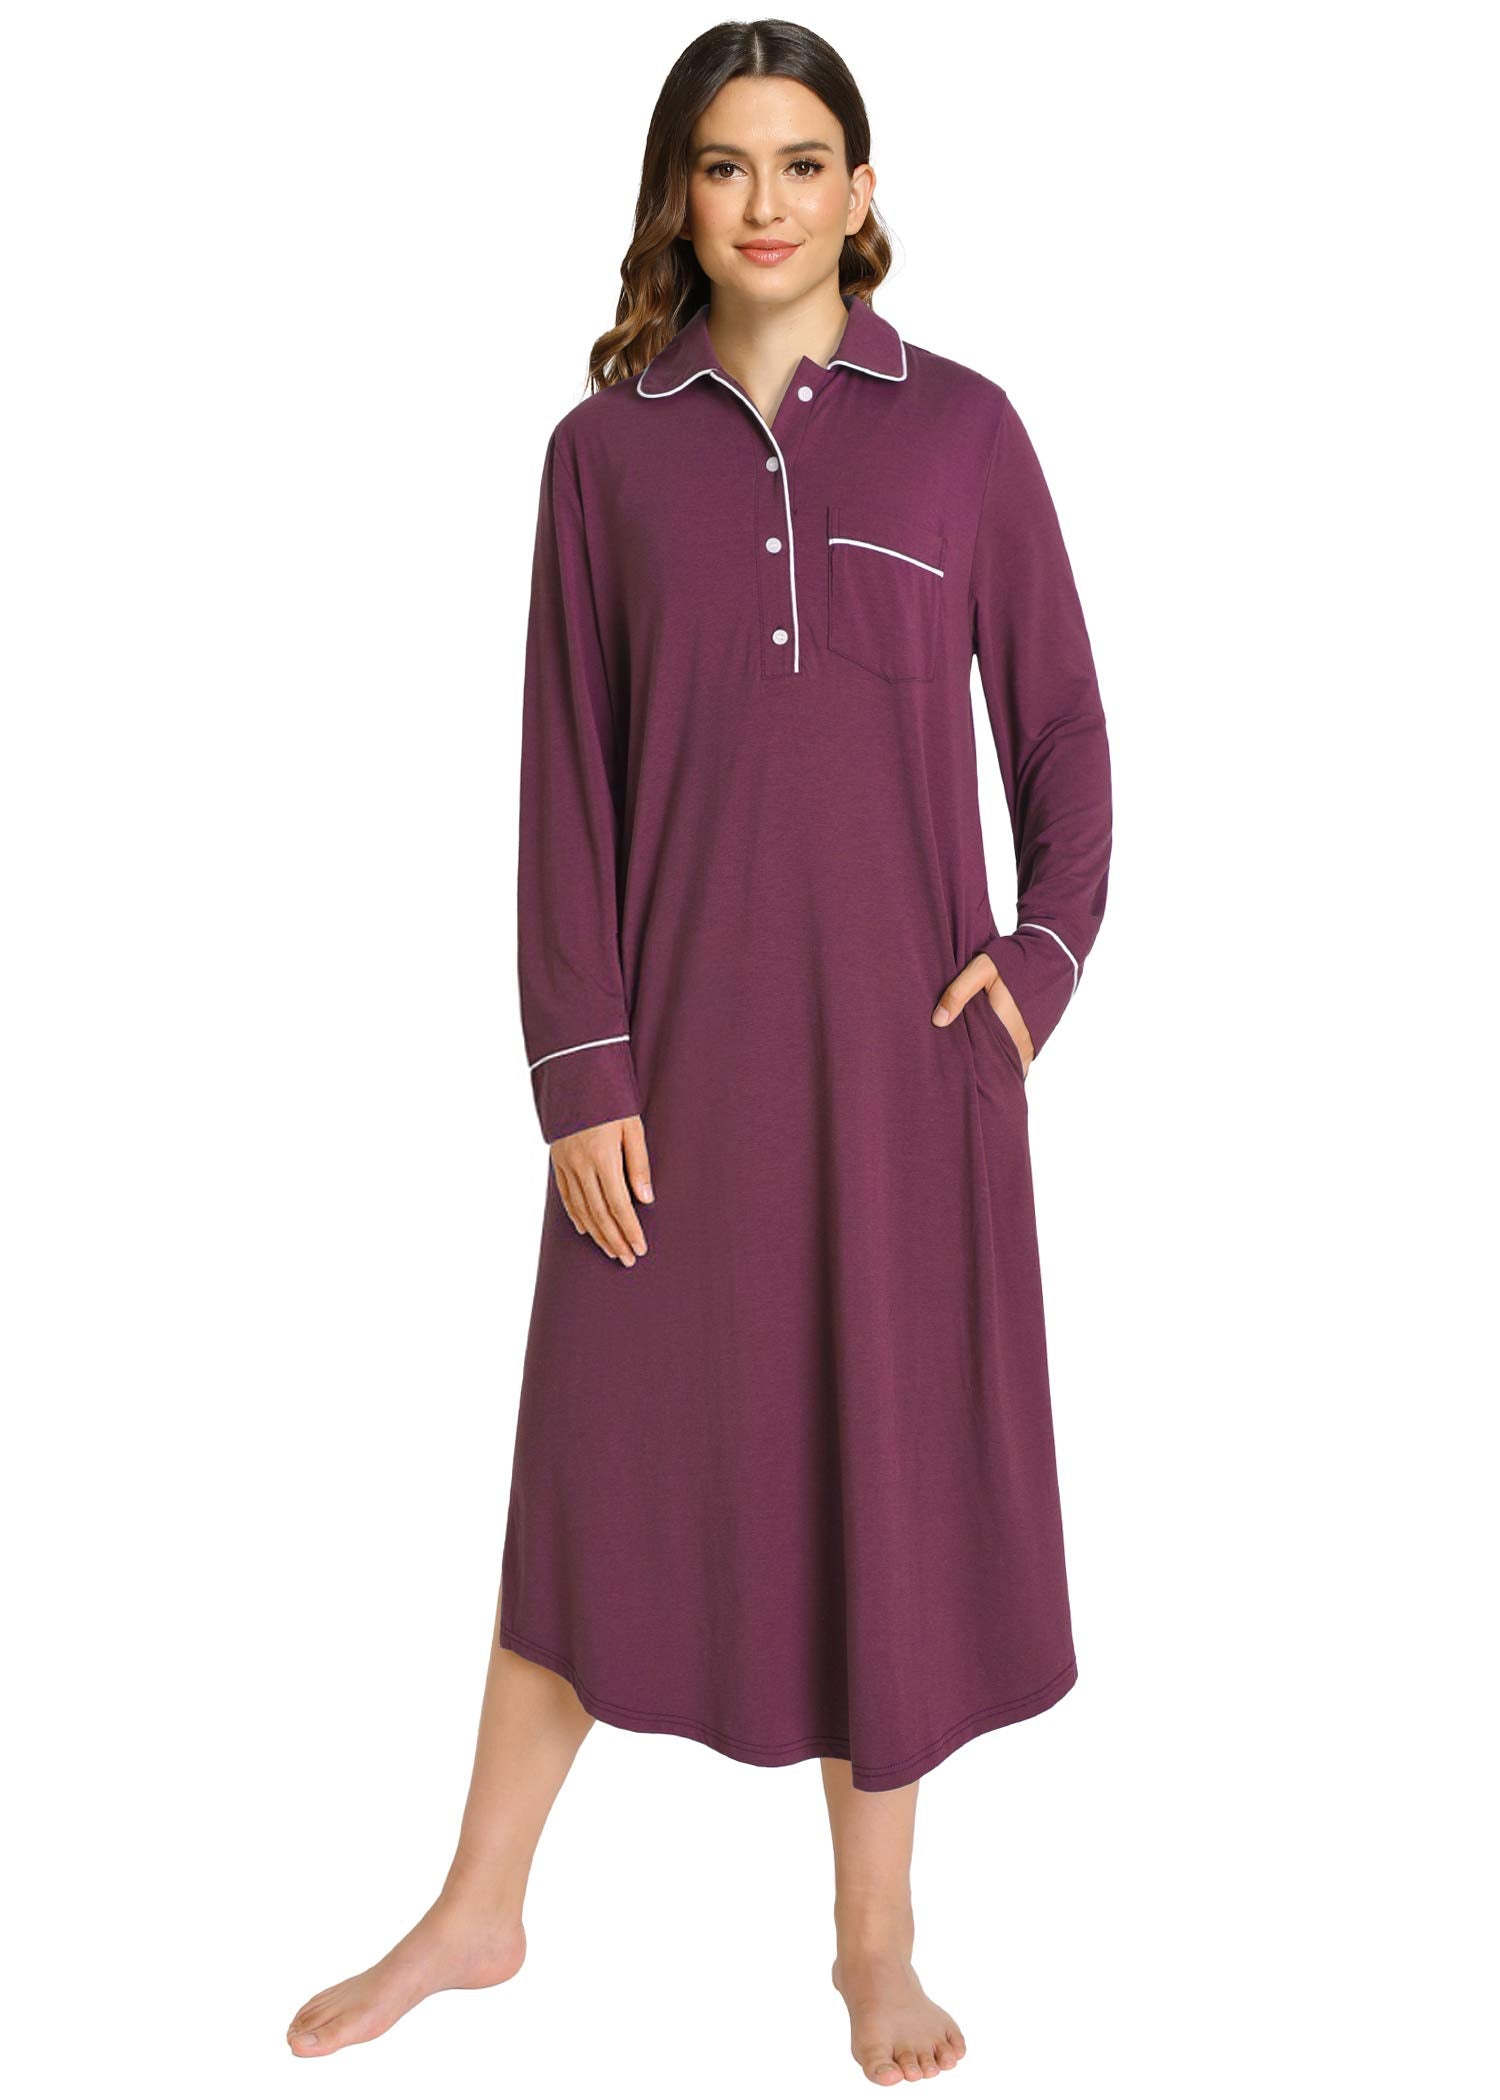  Womens Sleep Shirts Button Down Night Shirt Maternity  Nightgowns Cotton Nursing Dress